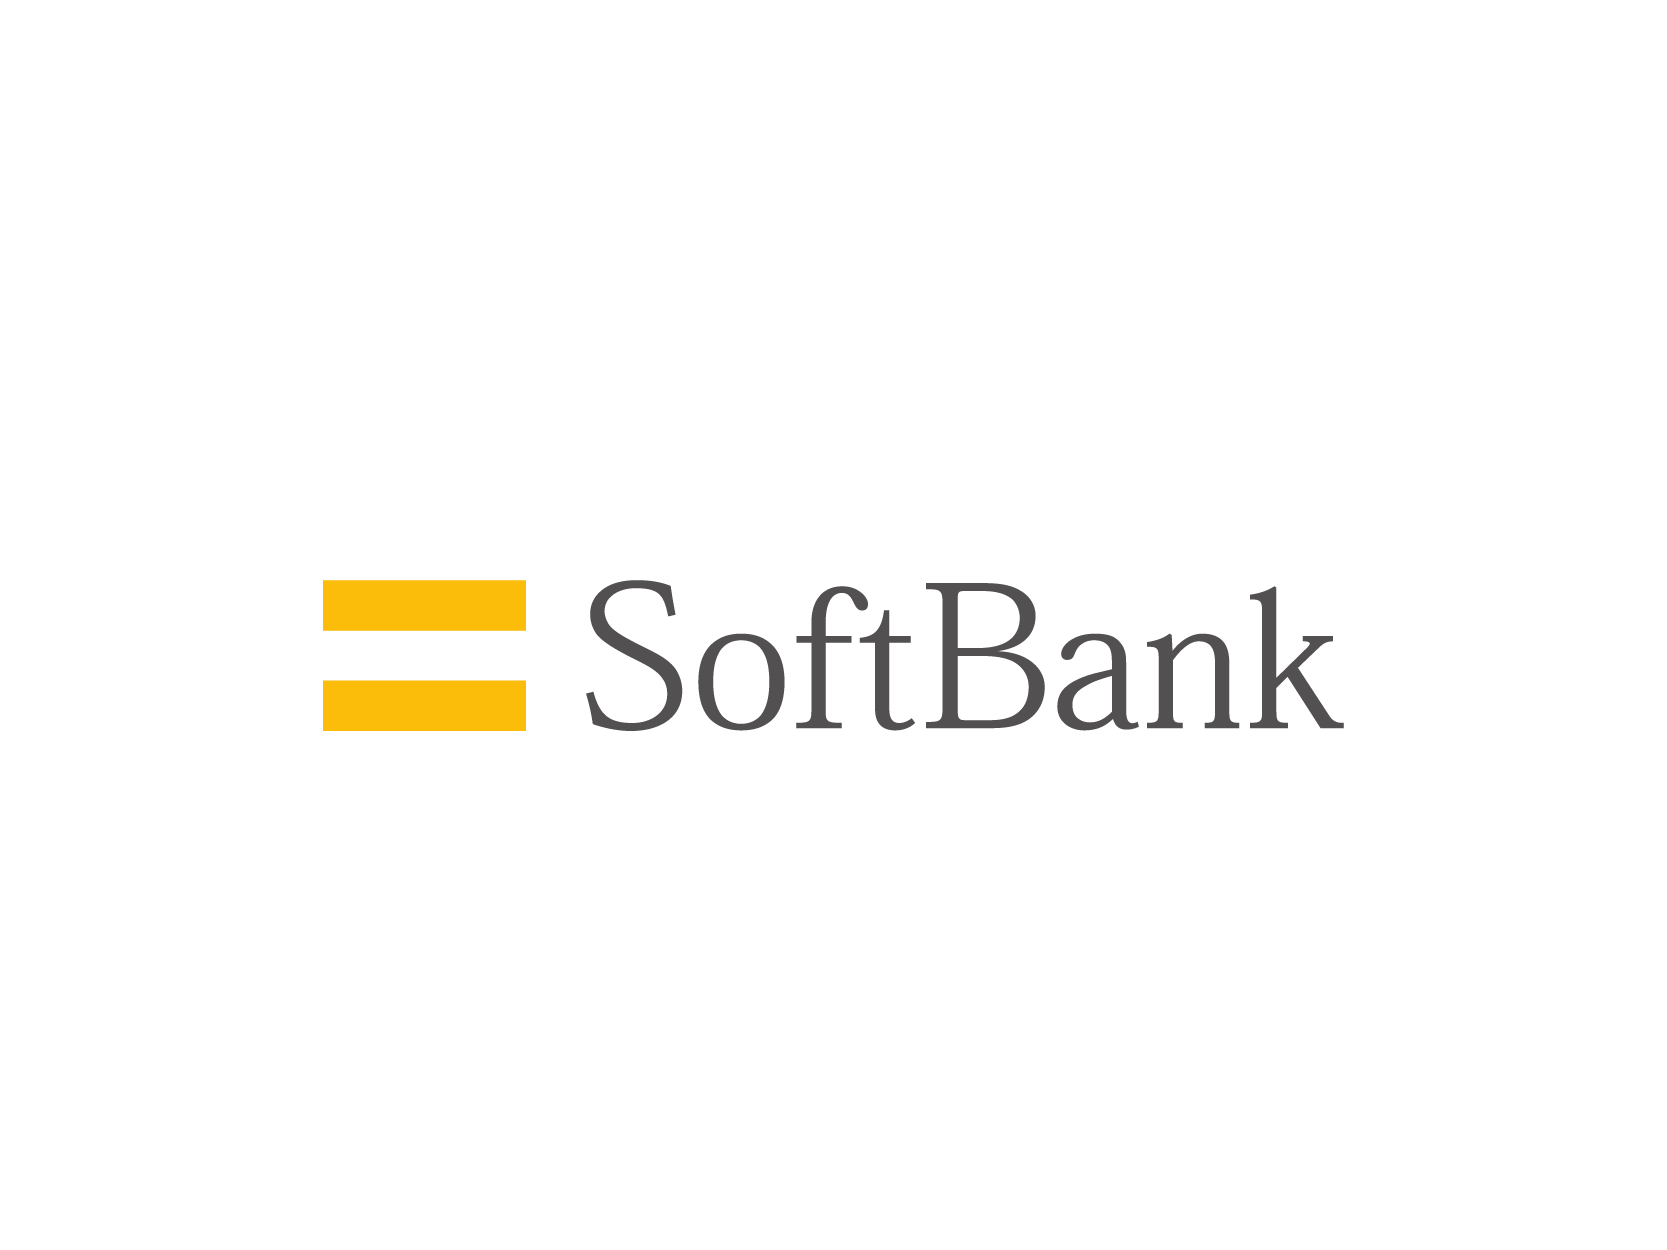 softbank软银标志矢量图